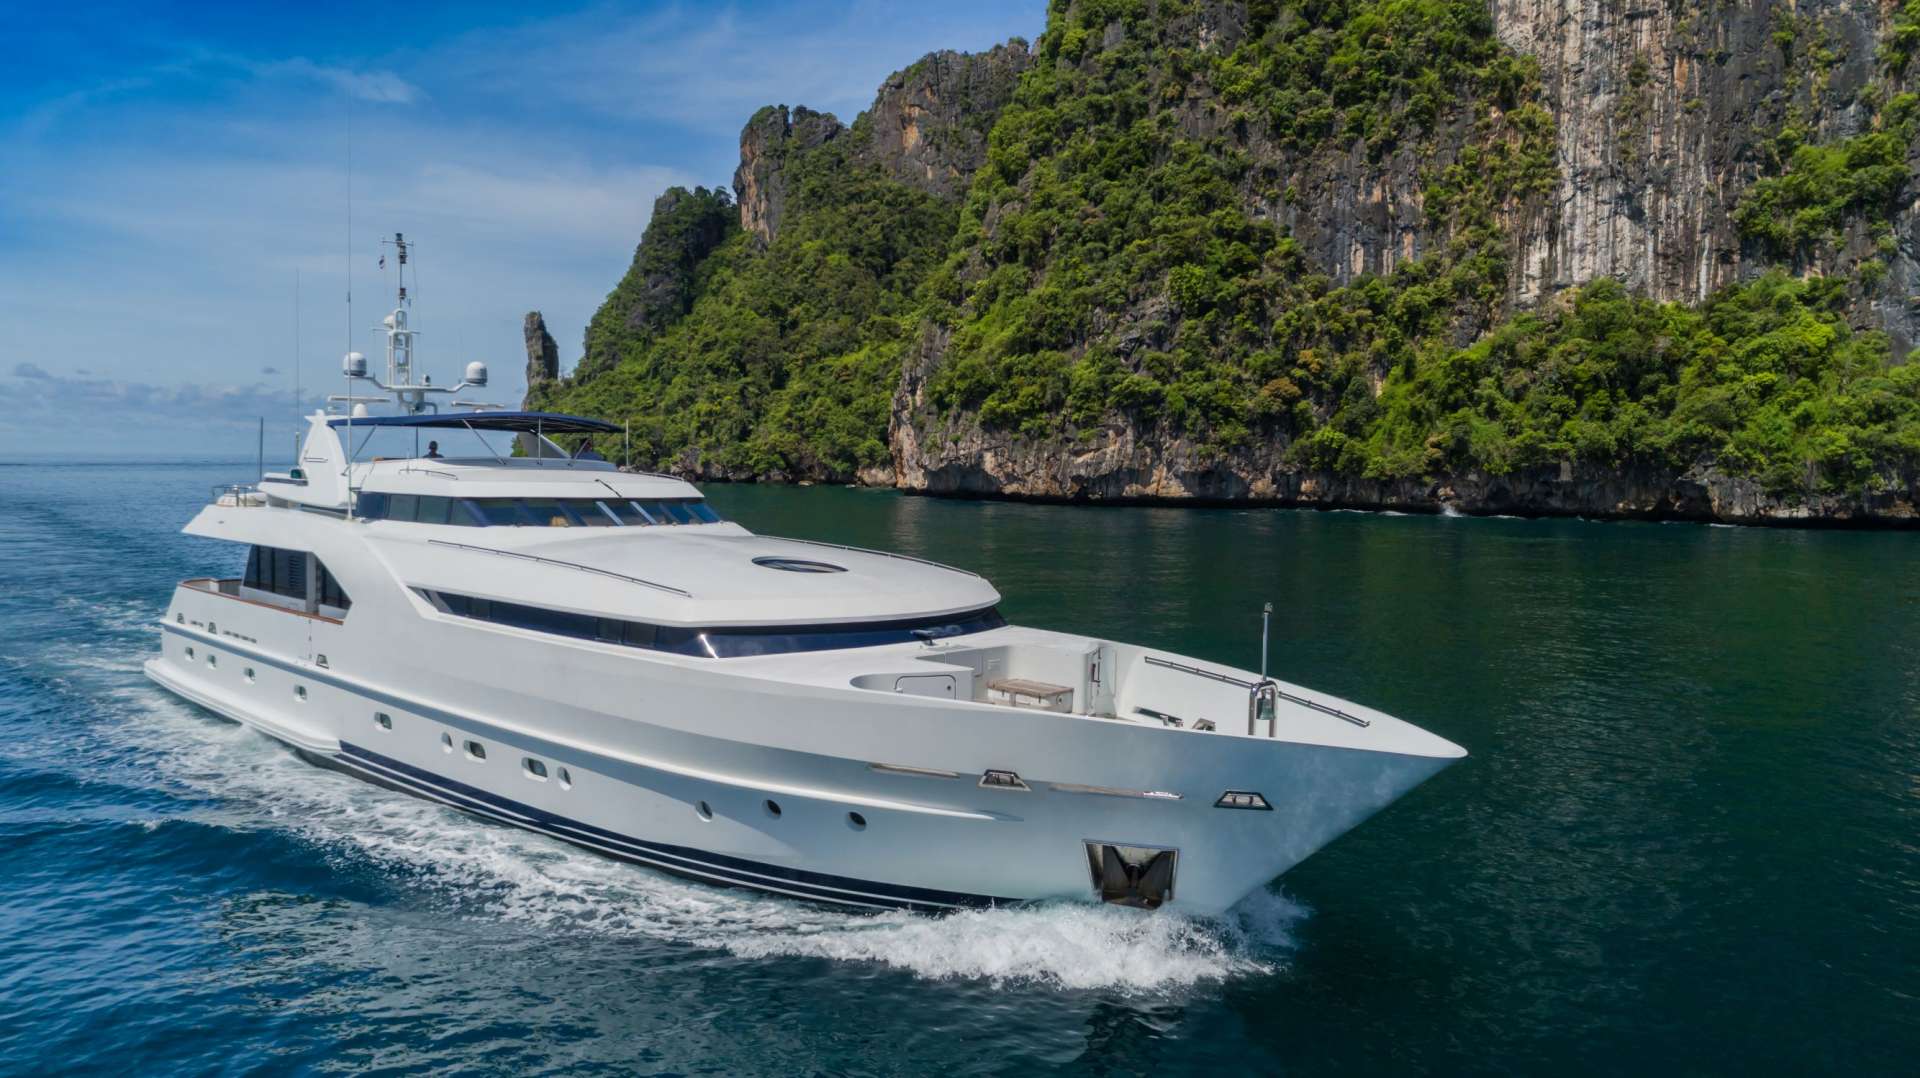 xanadu of london - Yacht Charter Malaysia & Boat hire in SE Asia 1